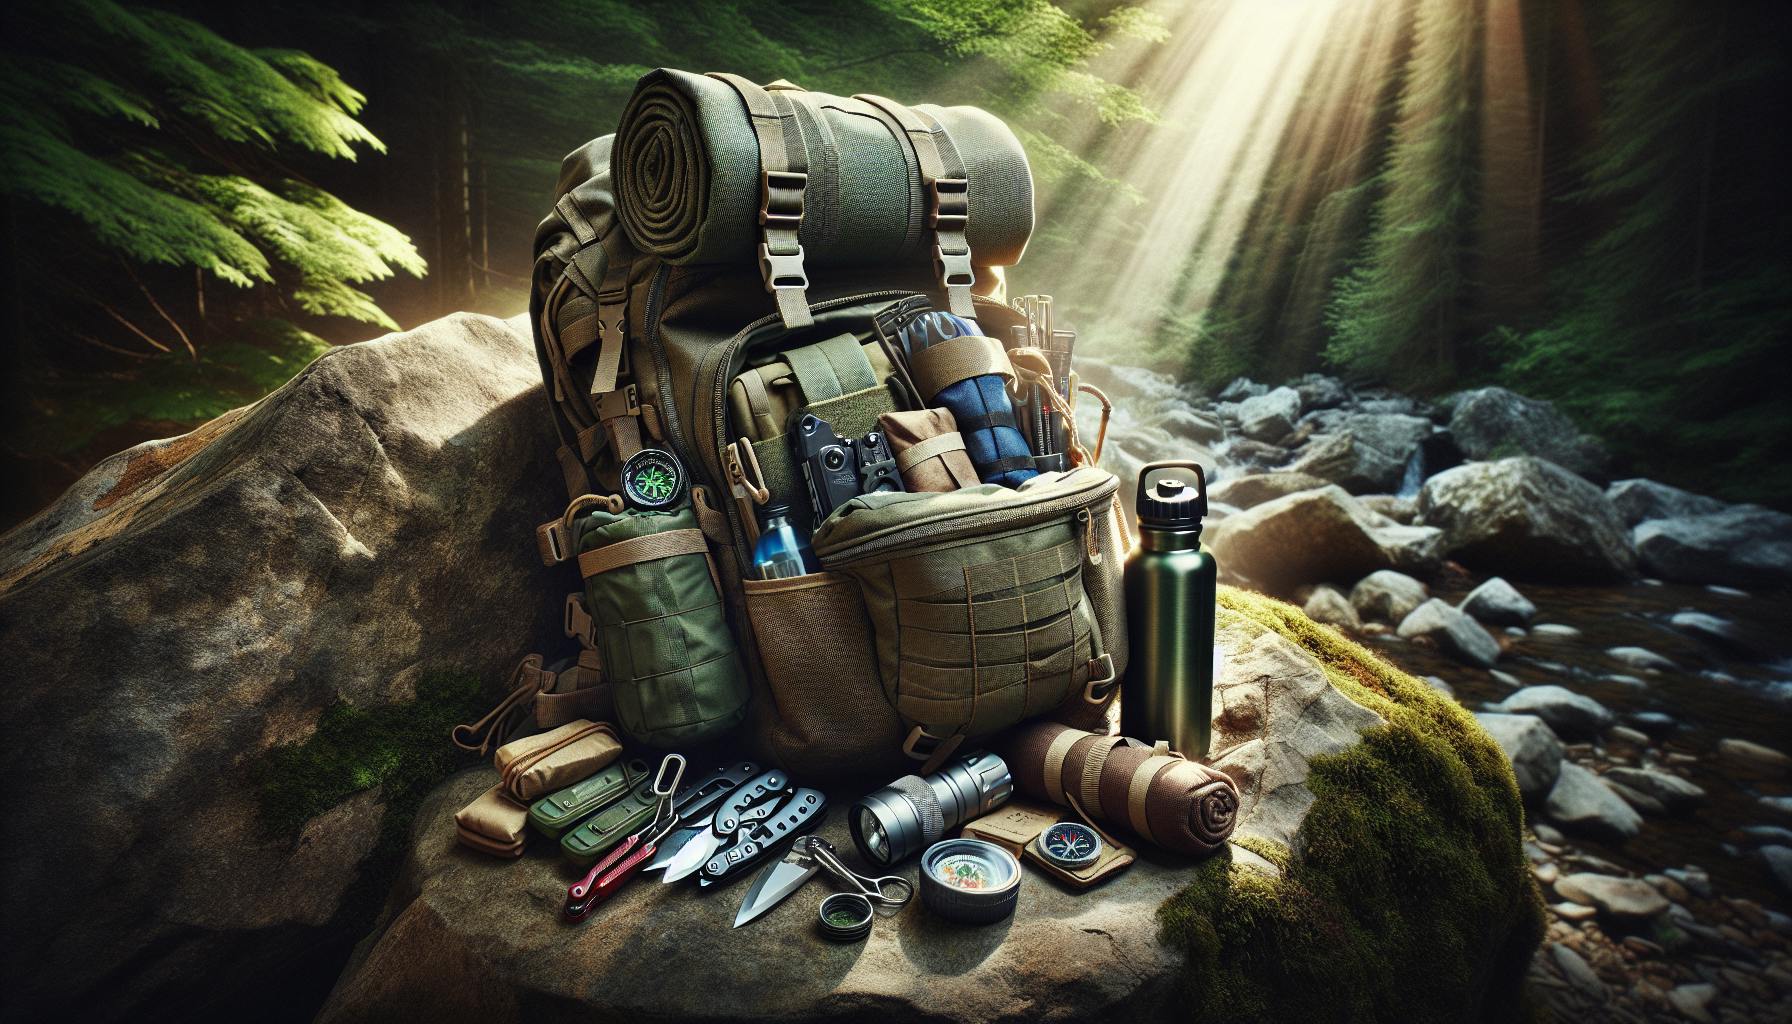 Survival Backpack Essentials: Pack Smart, Stay Prepared